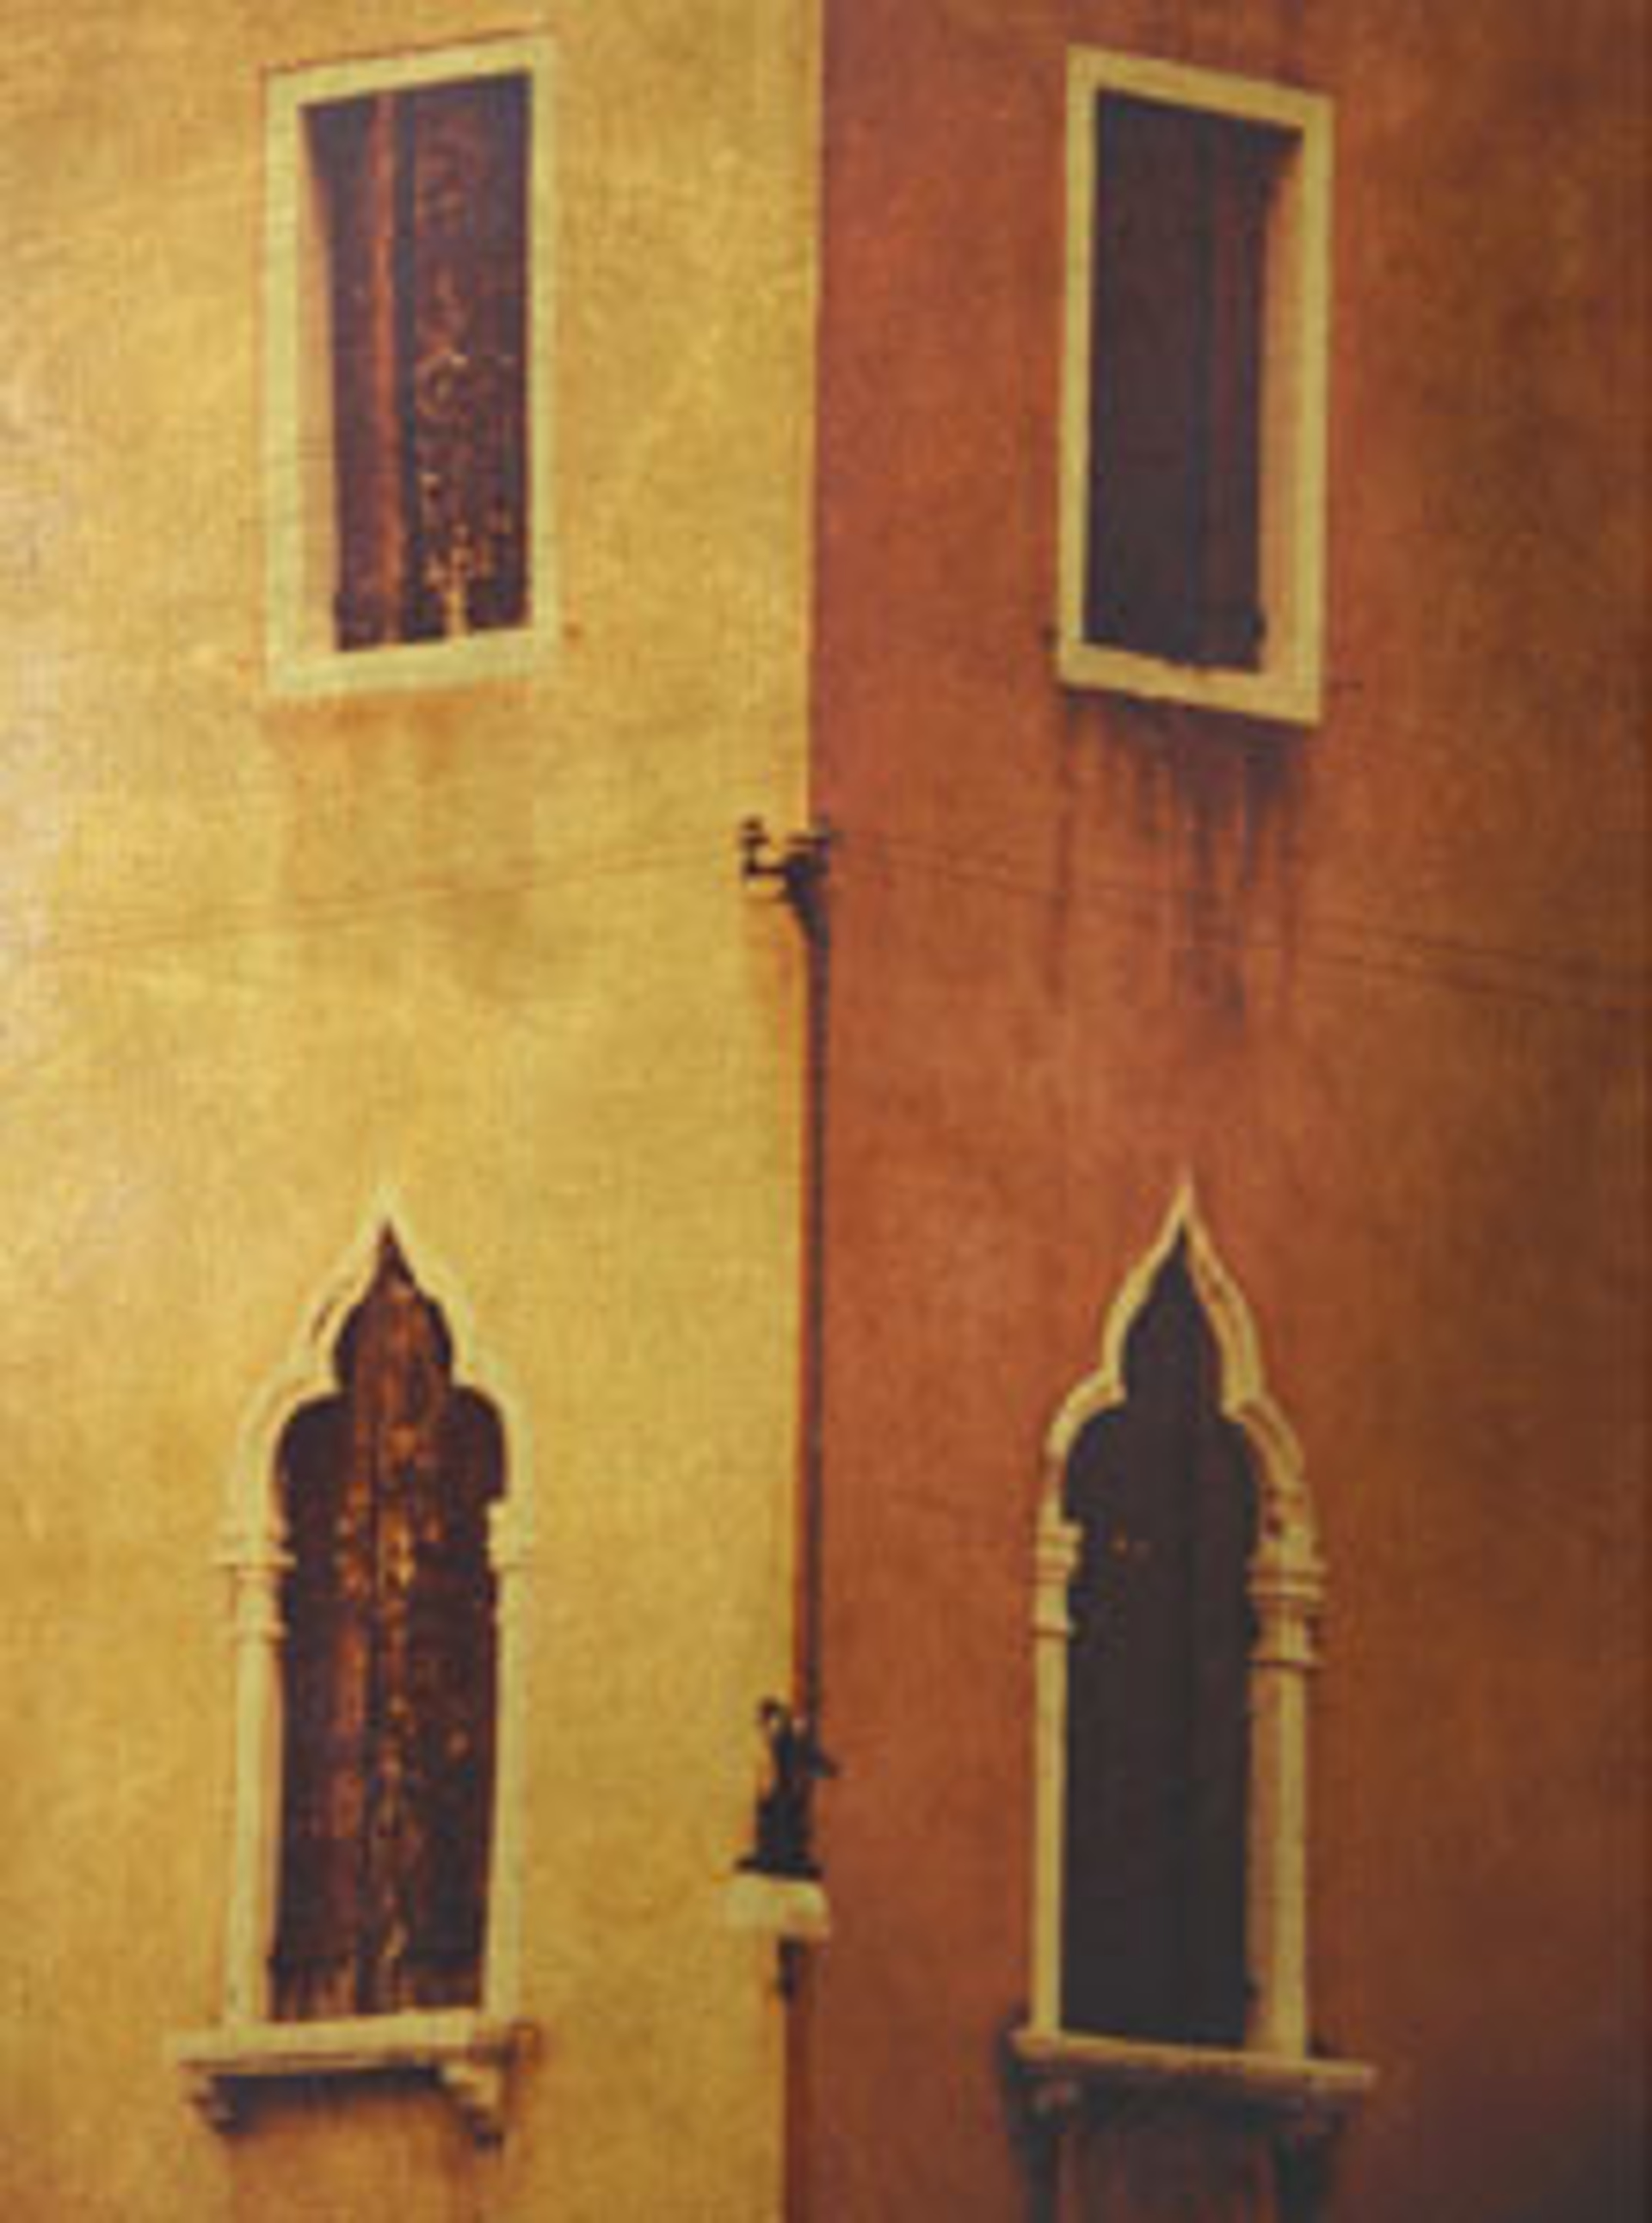 Venice #1 by Patty Mulligan